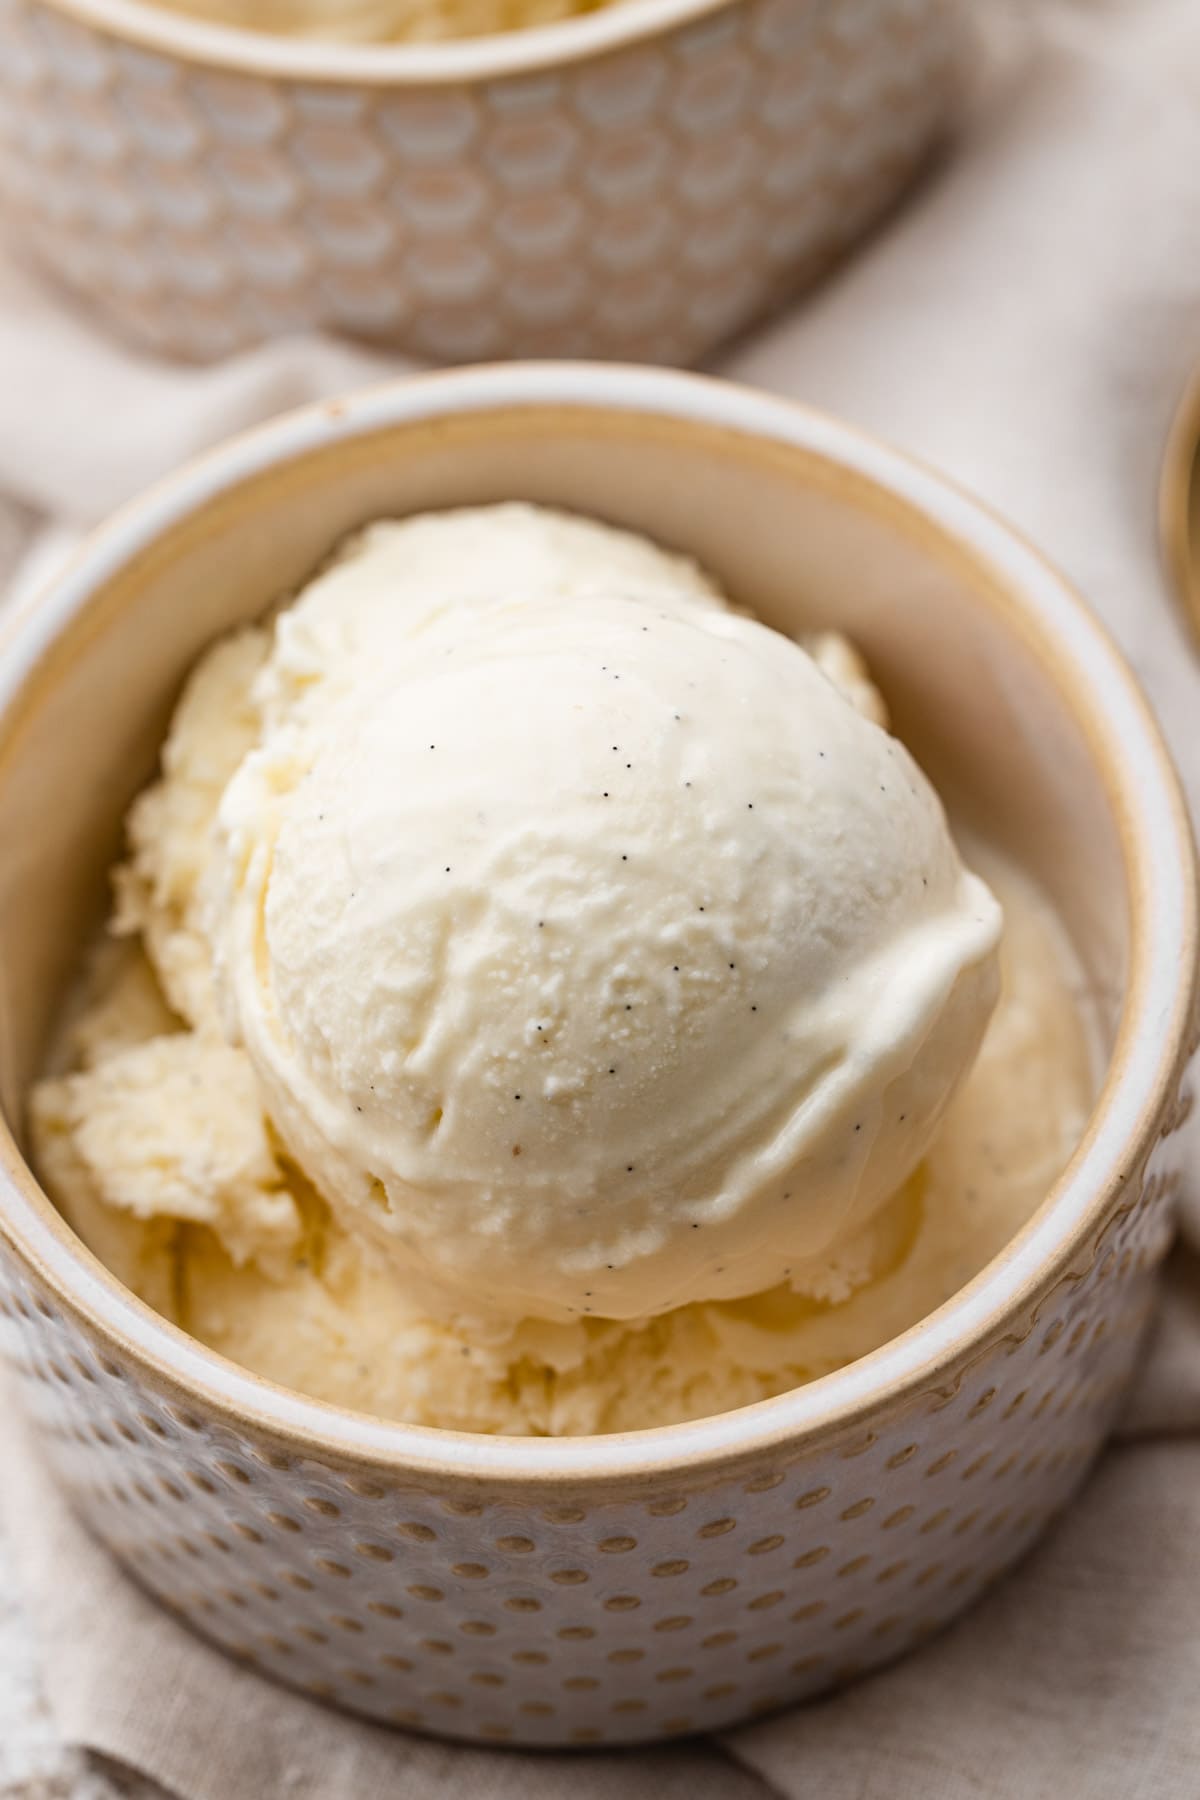 A scoop of vanilla bean ice cream.